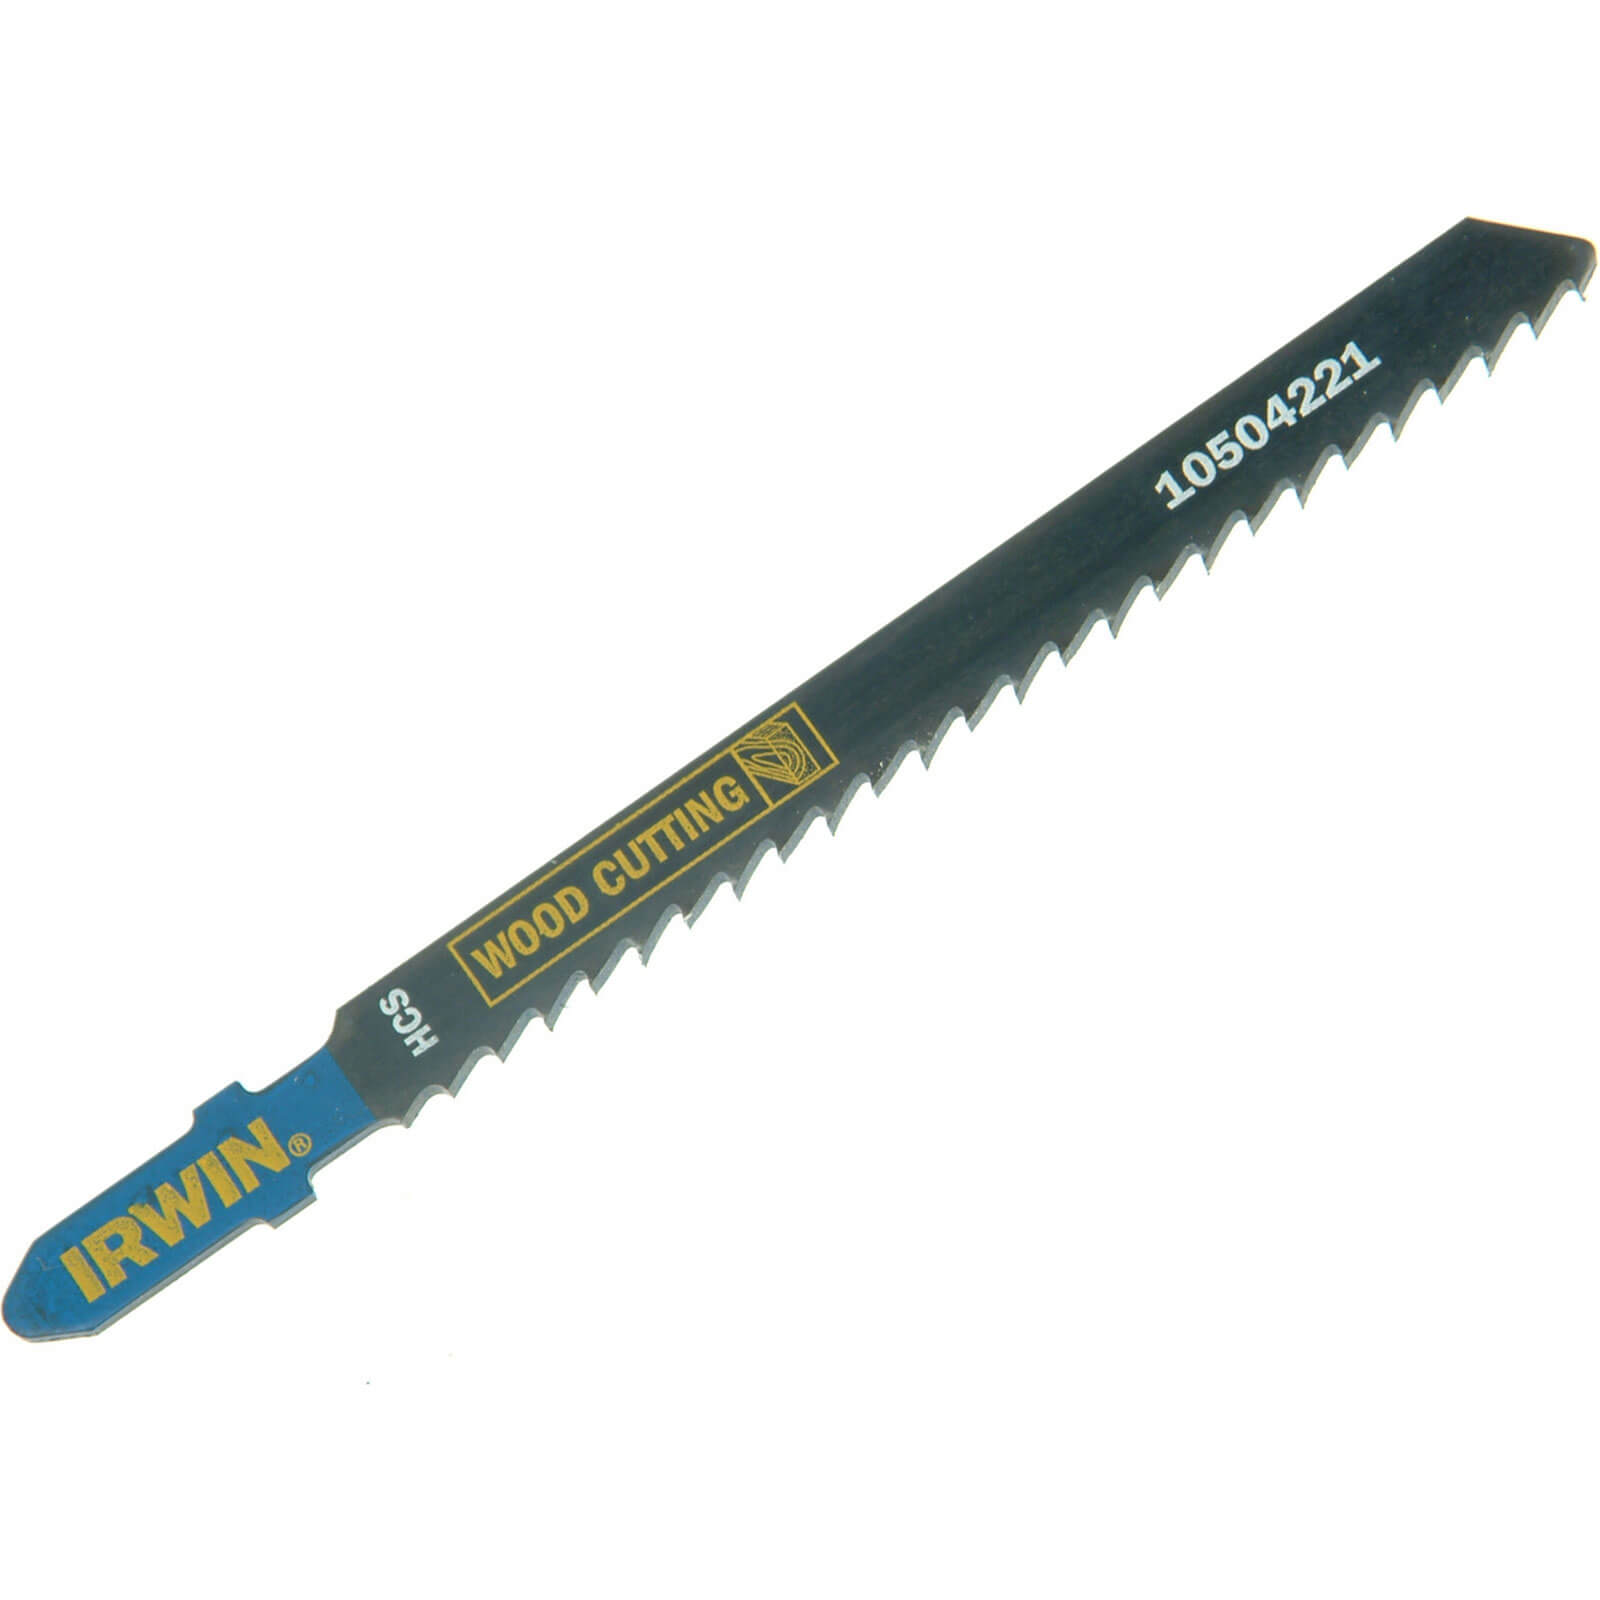 Photos - Power Tool Accessory IRWIN T244D T Shank Wood Cutting Jigsaw Blades Pack of 5 IRW10504224 